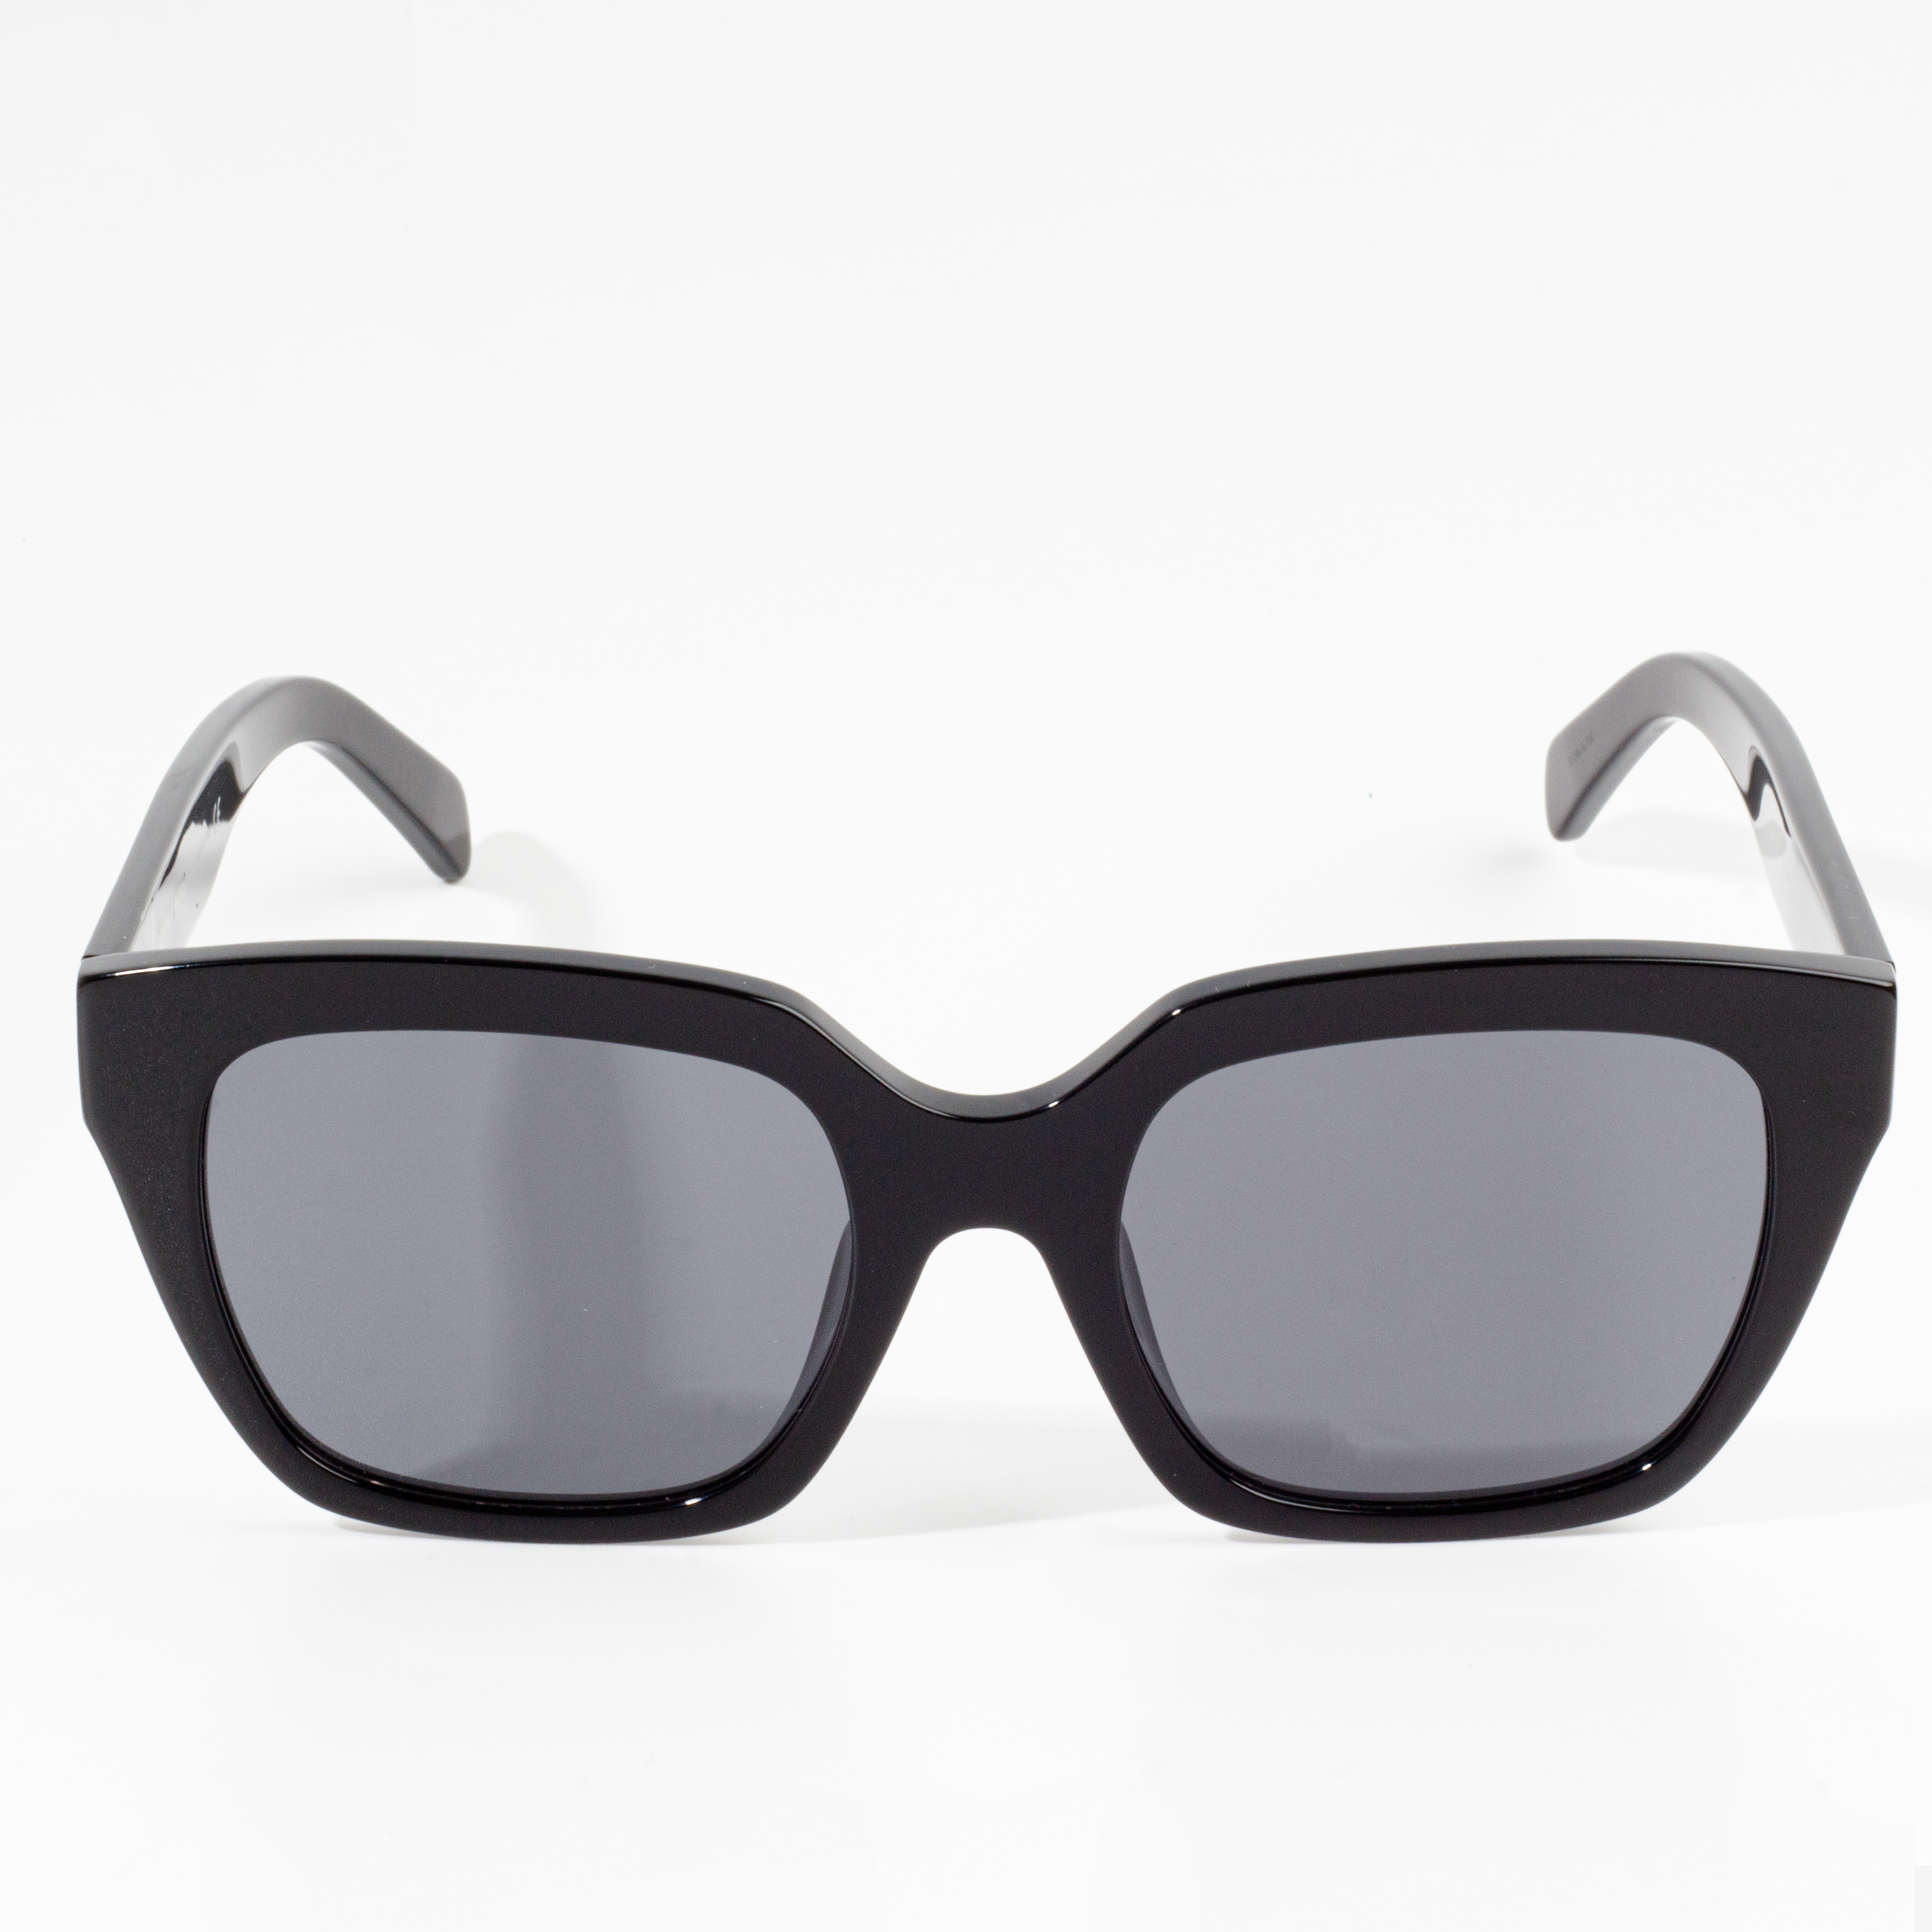 Wholesale Cheap Sunglasses Prices Ladies